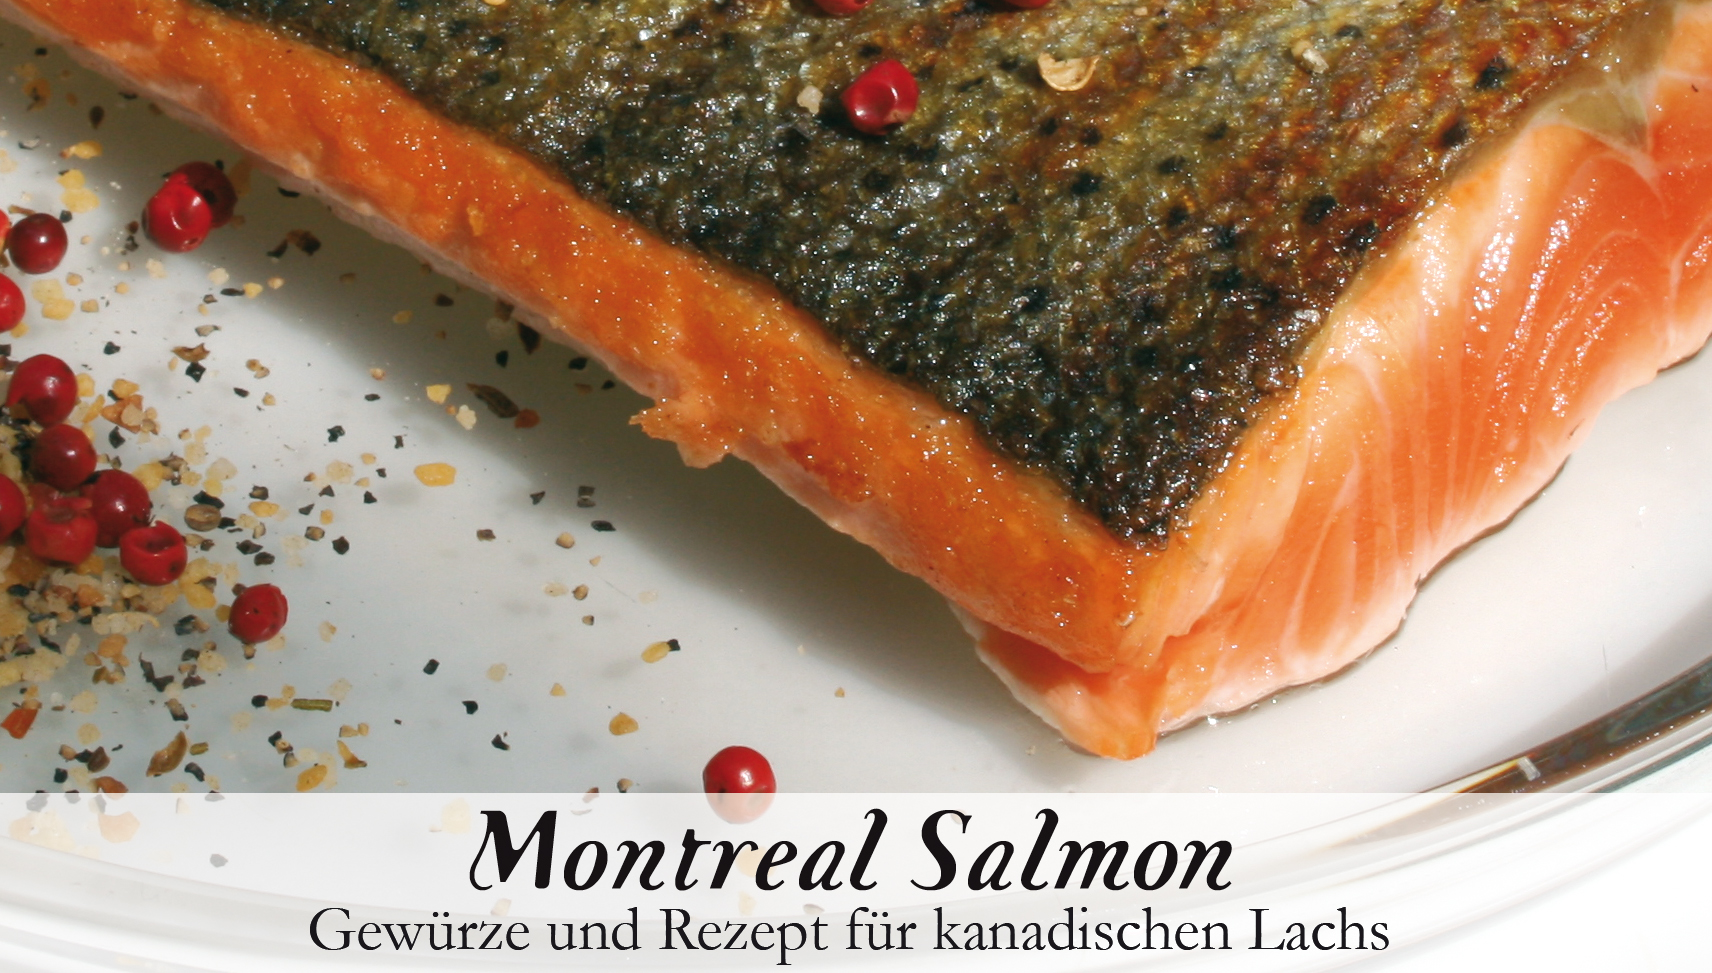 Montreal Salmon-Gewürzkasten